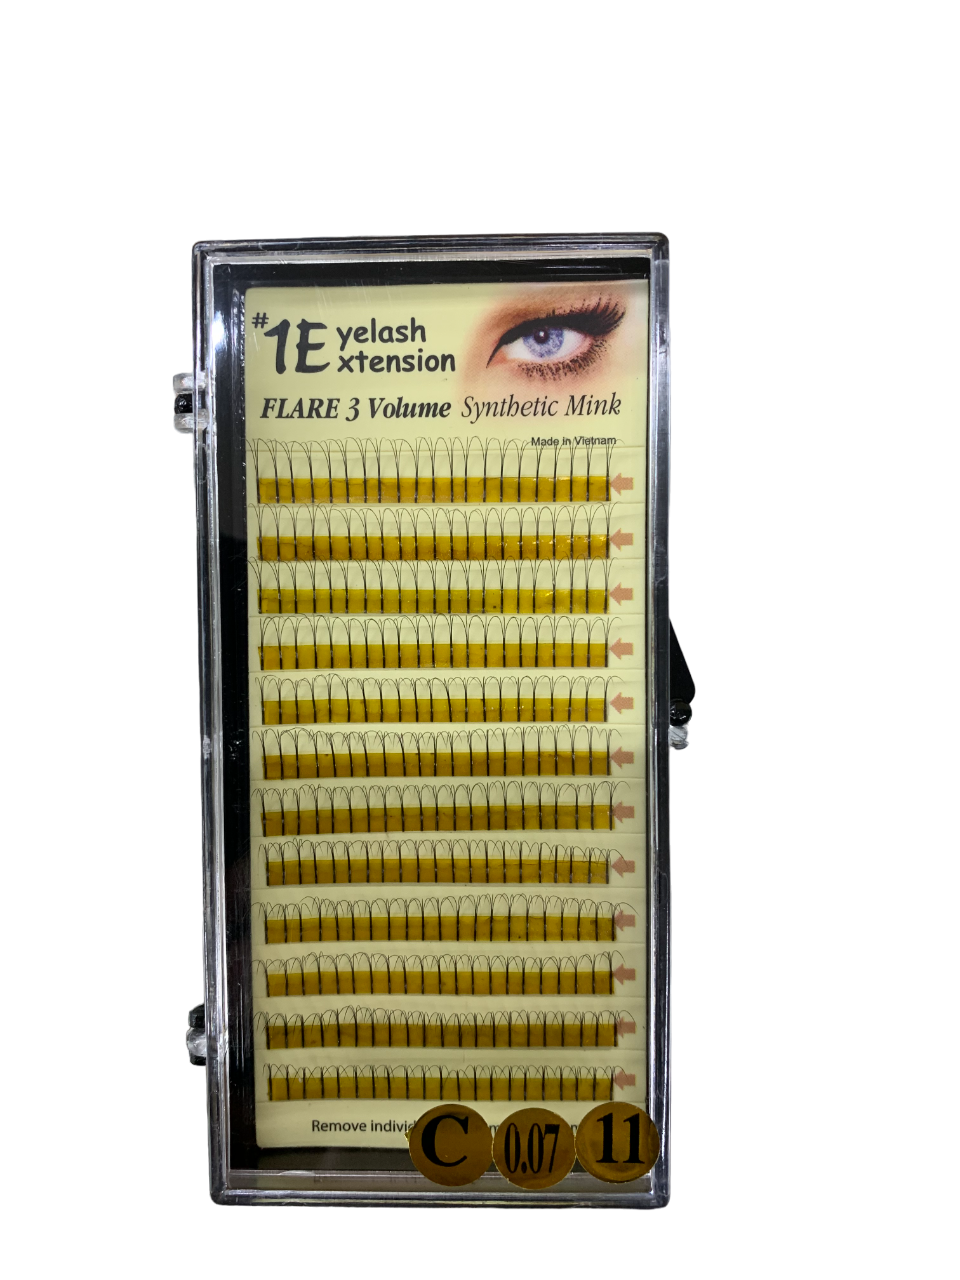 1E Eyelash Extension Flare 3 Volume Synthetic Mink C-0.07-11